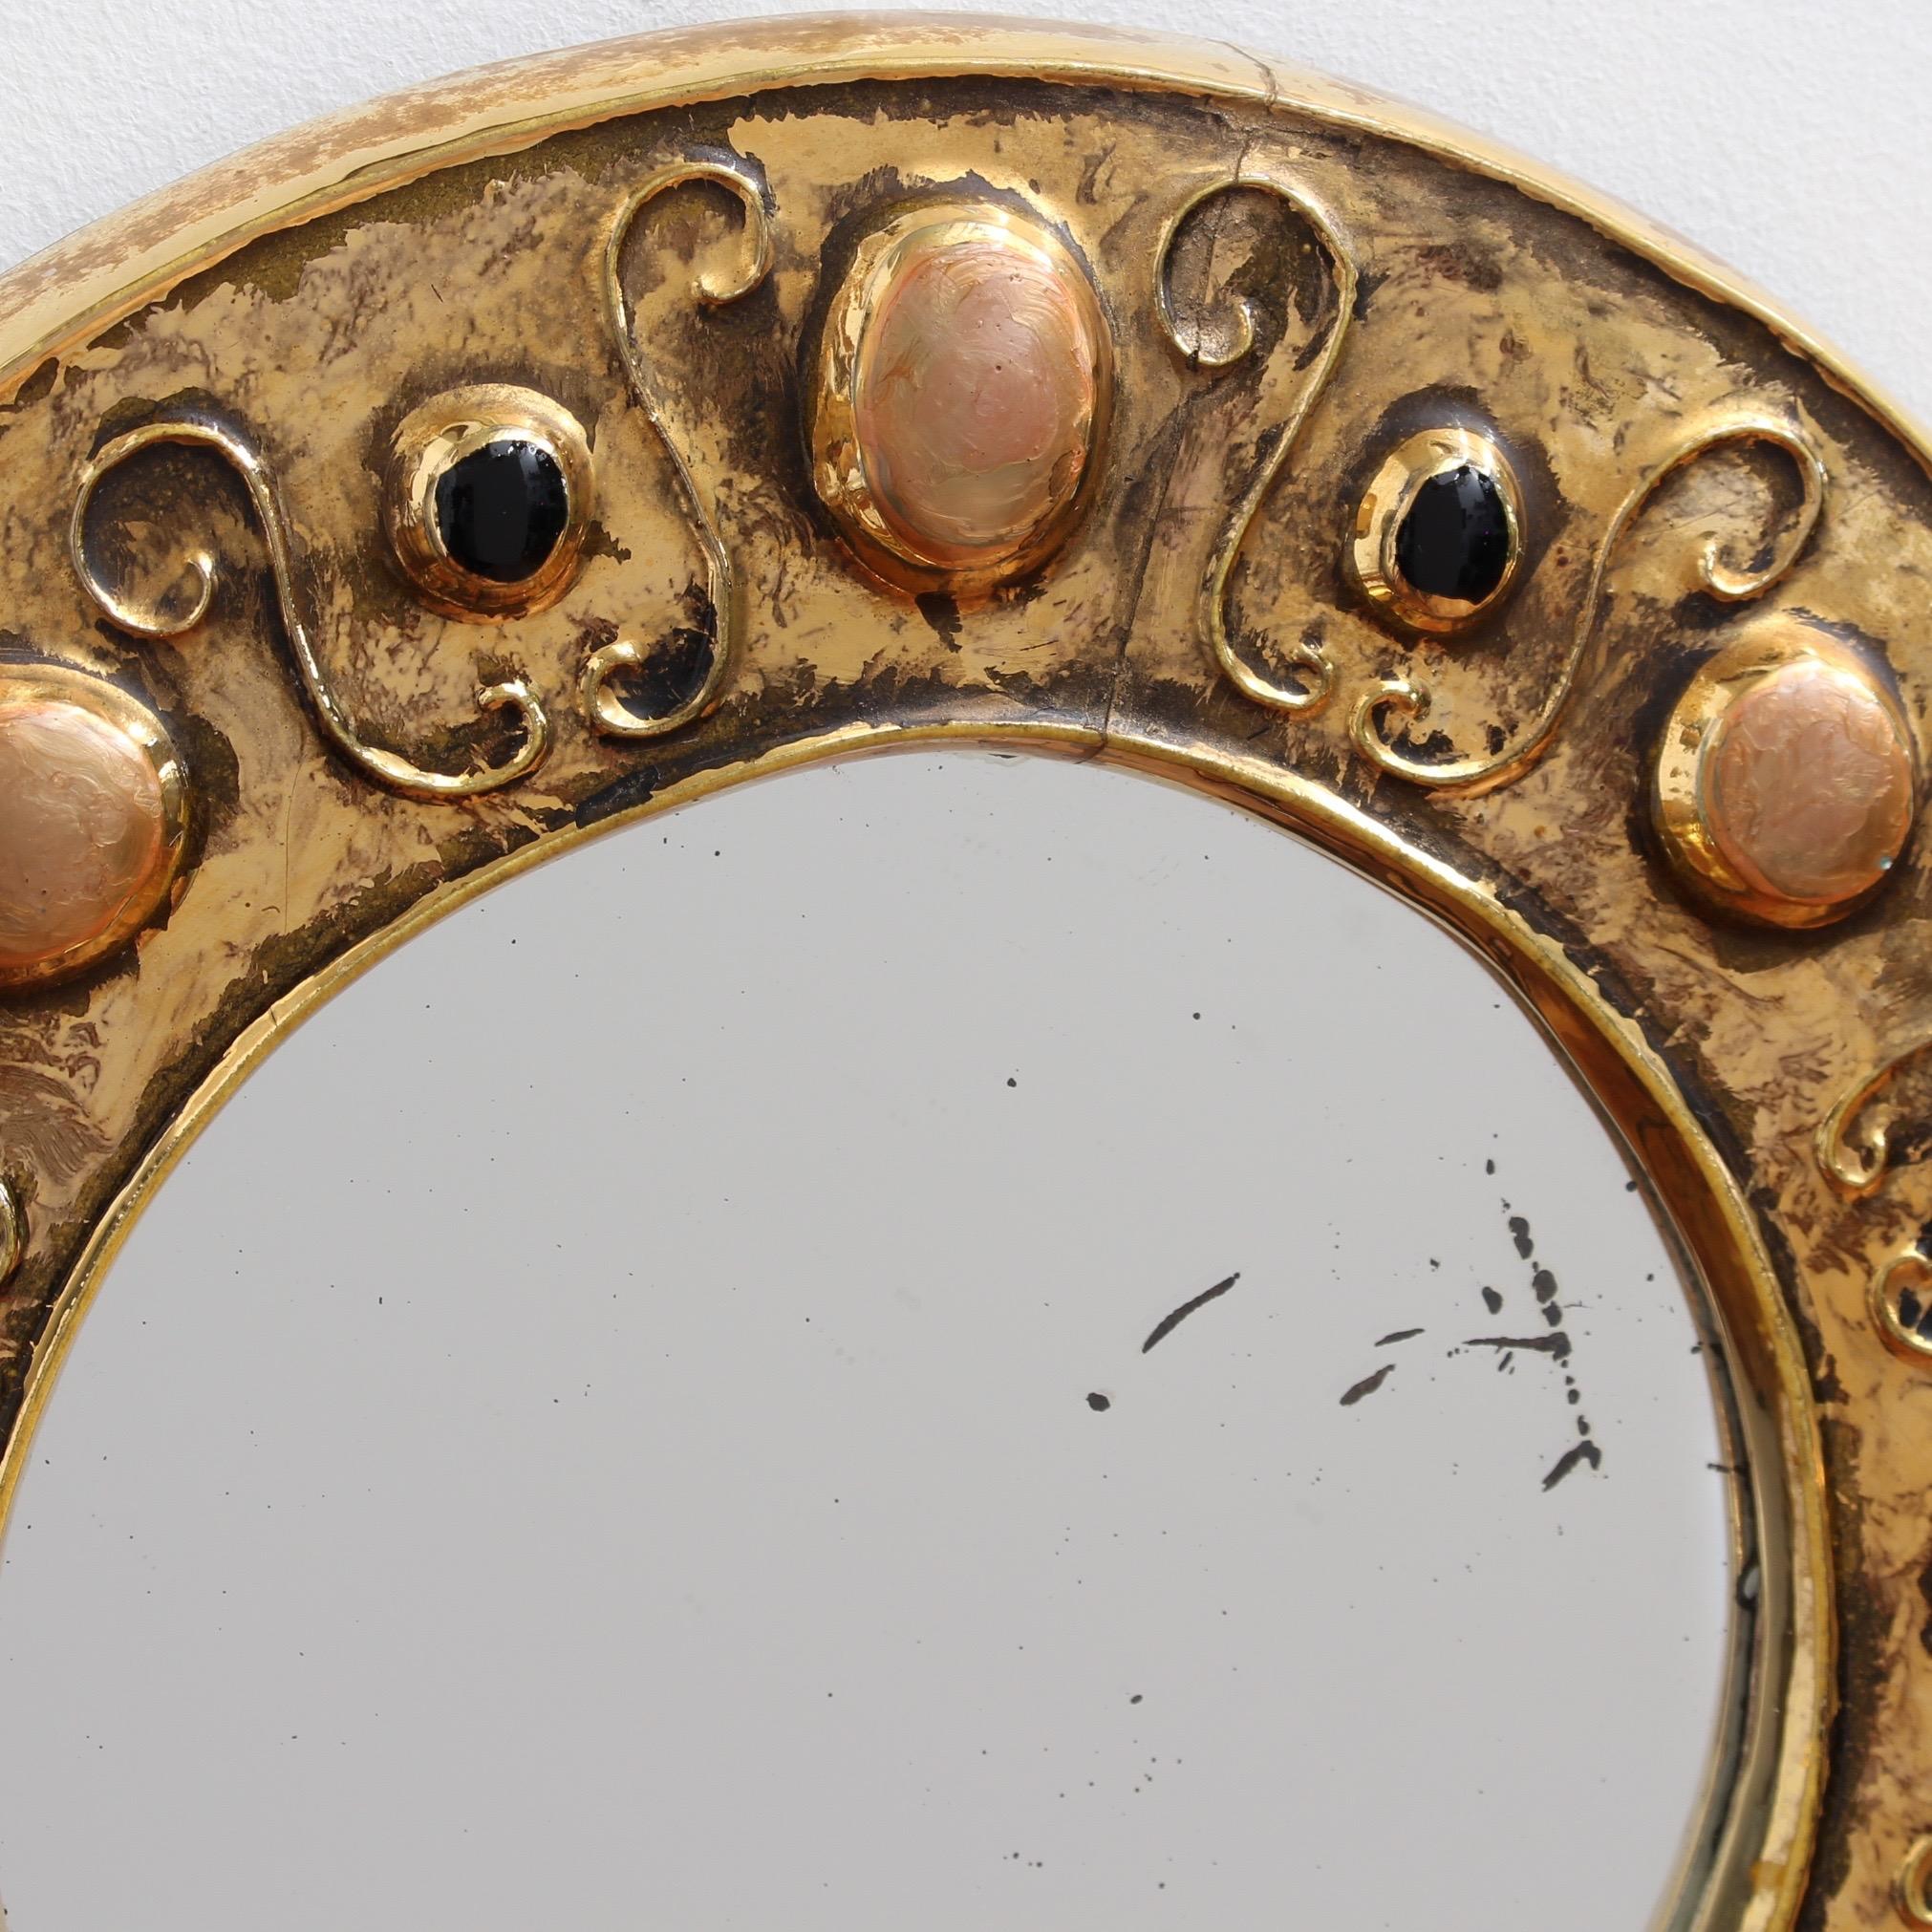 20th Century Gilded Ceramic Decorative Wall Mirror by François Lembo, circa 1960s-1970s